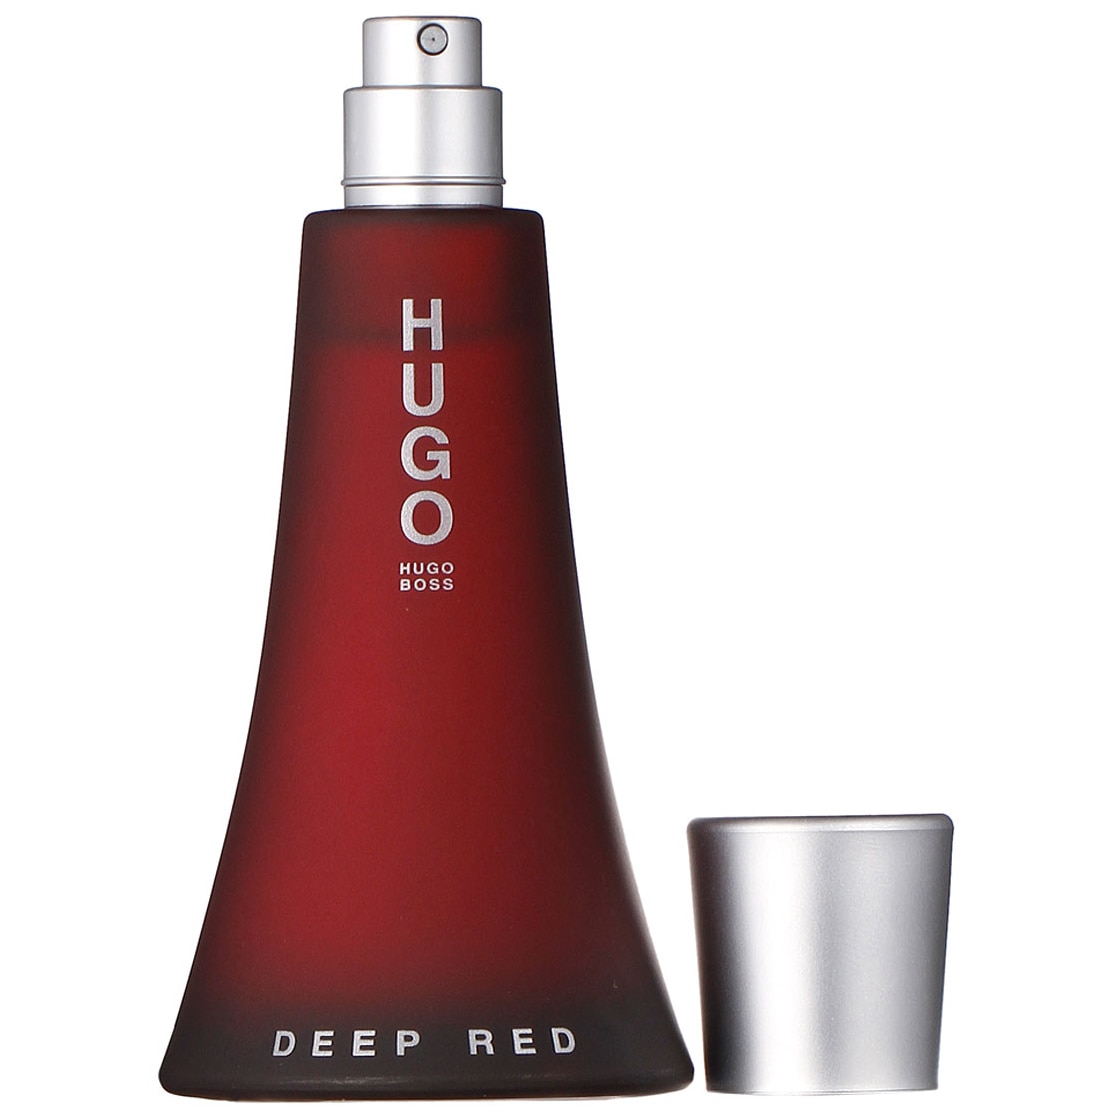 Хьюго босс дип. Hugo Boss Deep Red 50ml. Boss Hugo Deep Red 90ml EDP. Deep Red Hugo Boss 90 ml. Духи Хьюго босс дип ред.